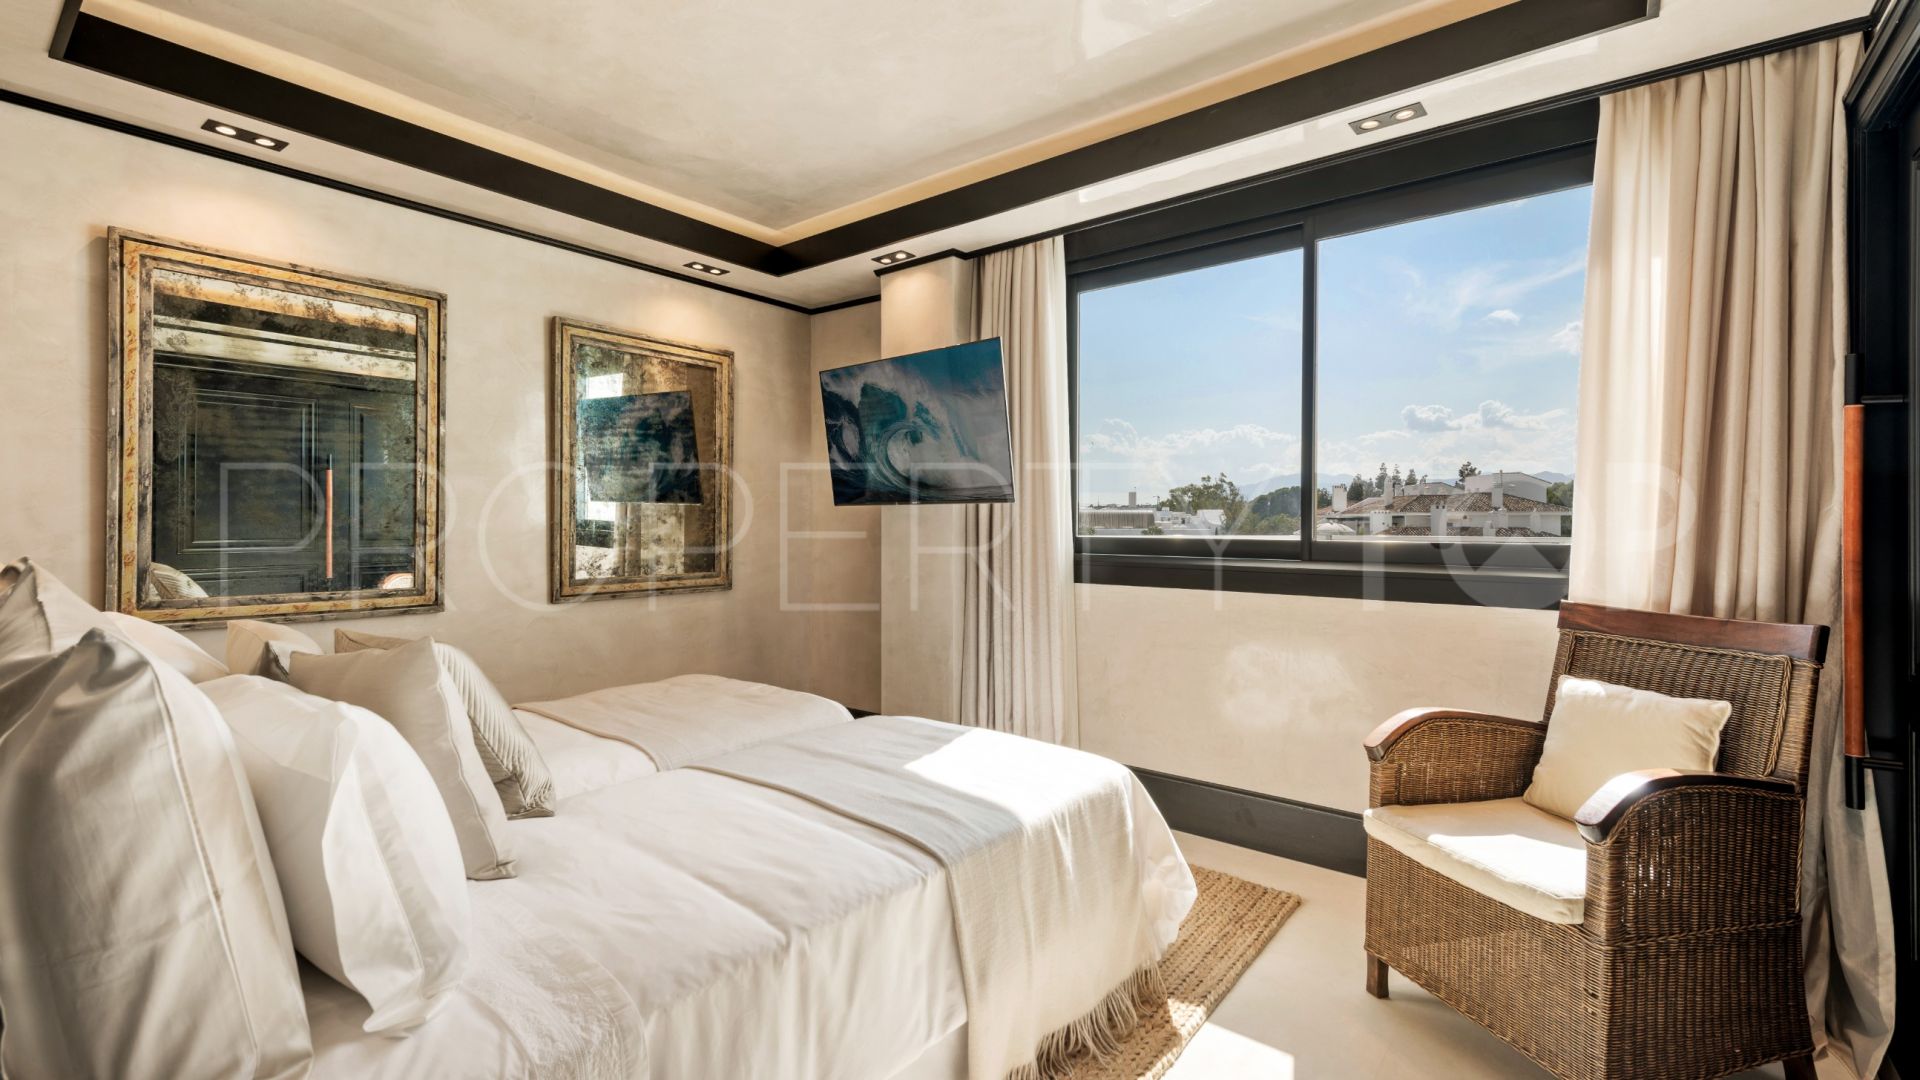 For sale 3 bedrooms duplex penthouse in Playa Esmeralda